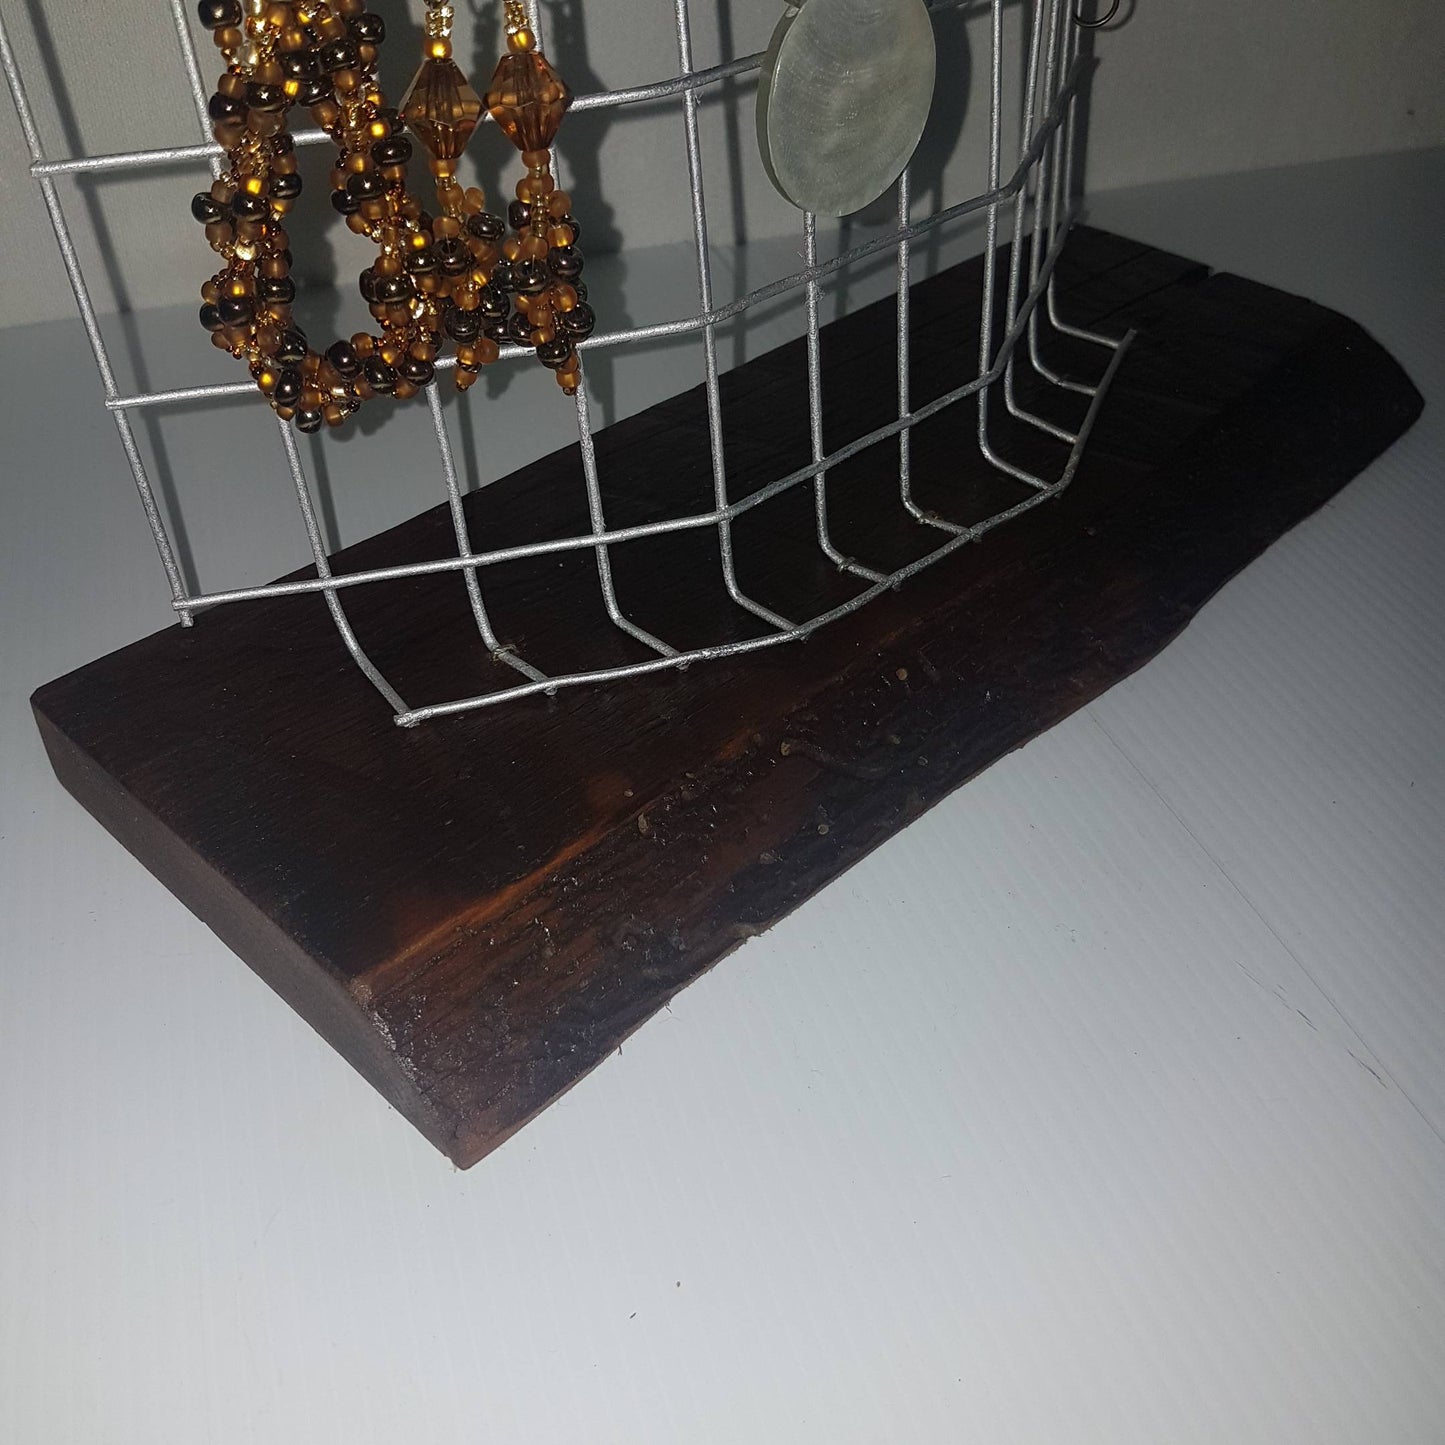 jewellery display rack holder organizer